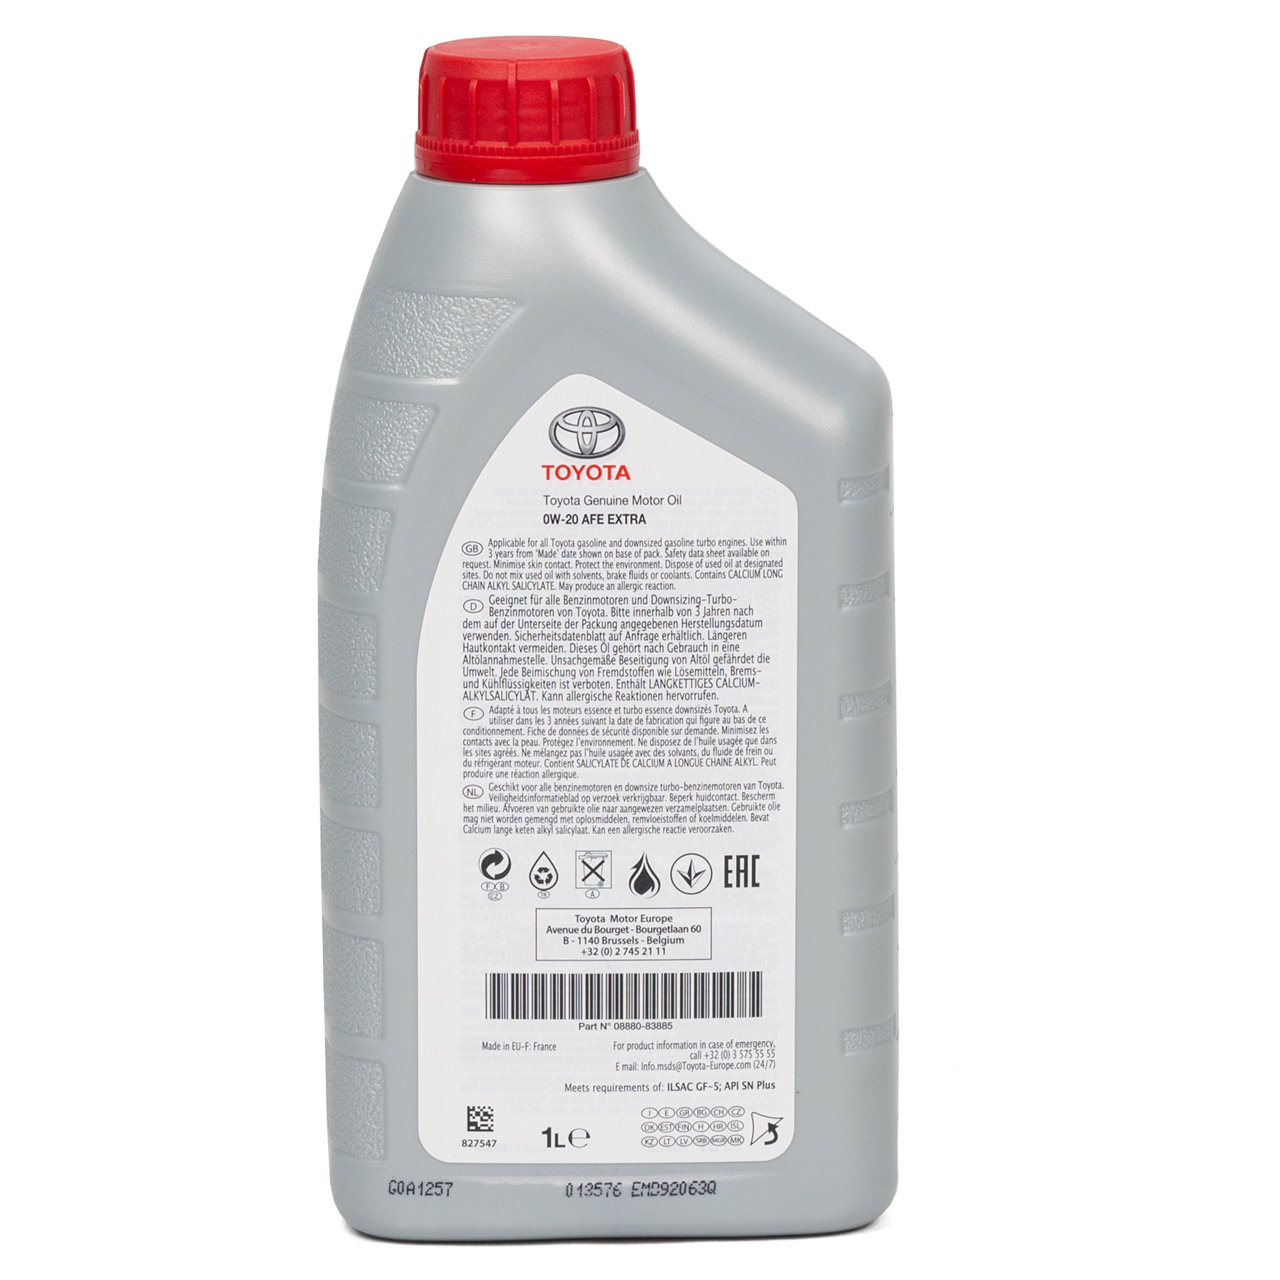 1L 1 Liter ORIGINAL Toyota Motoröl Öl ADVANCED FUEL ECONOMY AFE Extra 0W20 0W-20